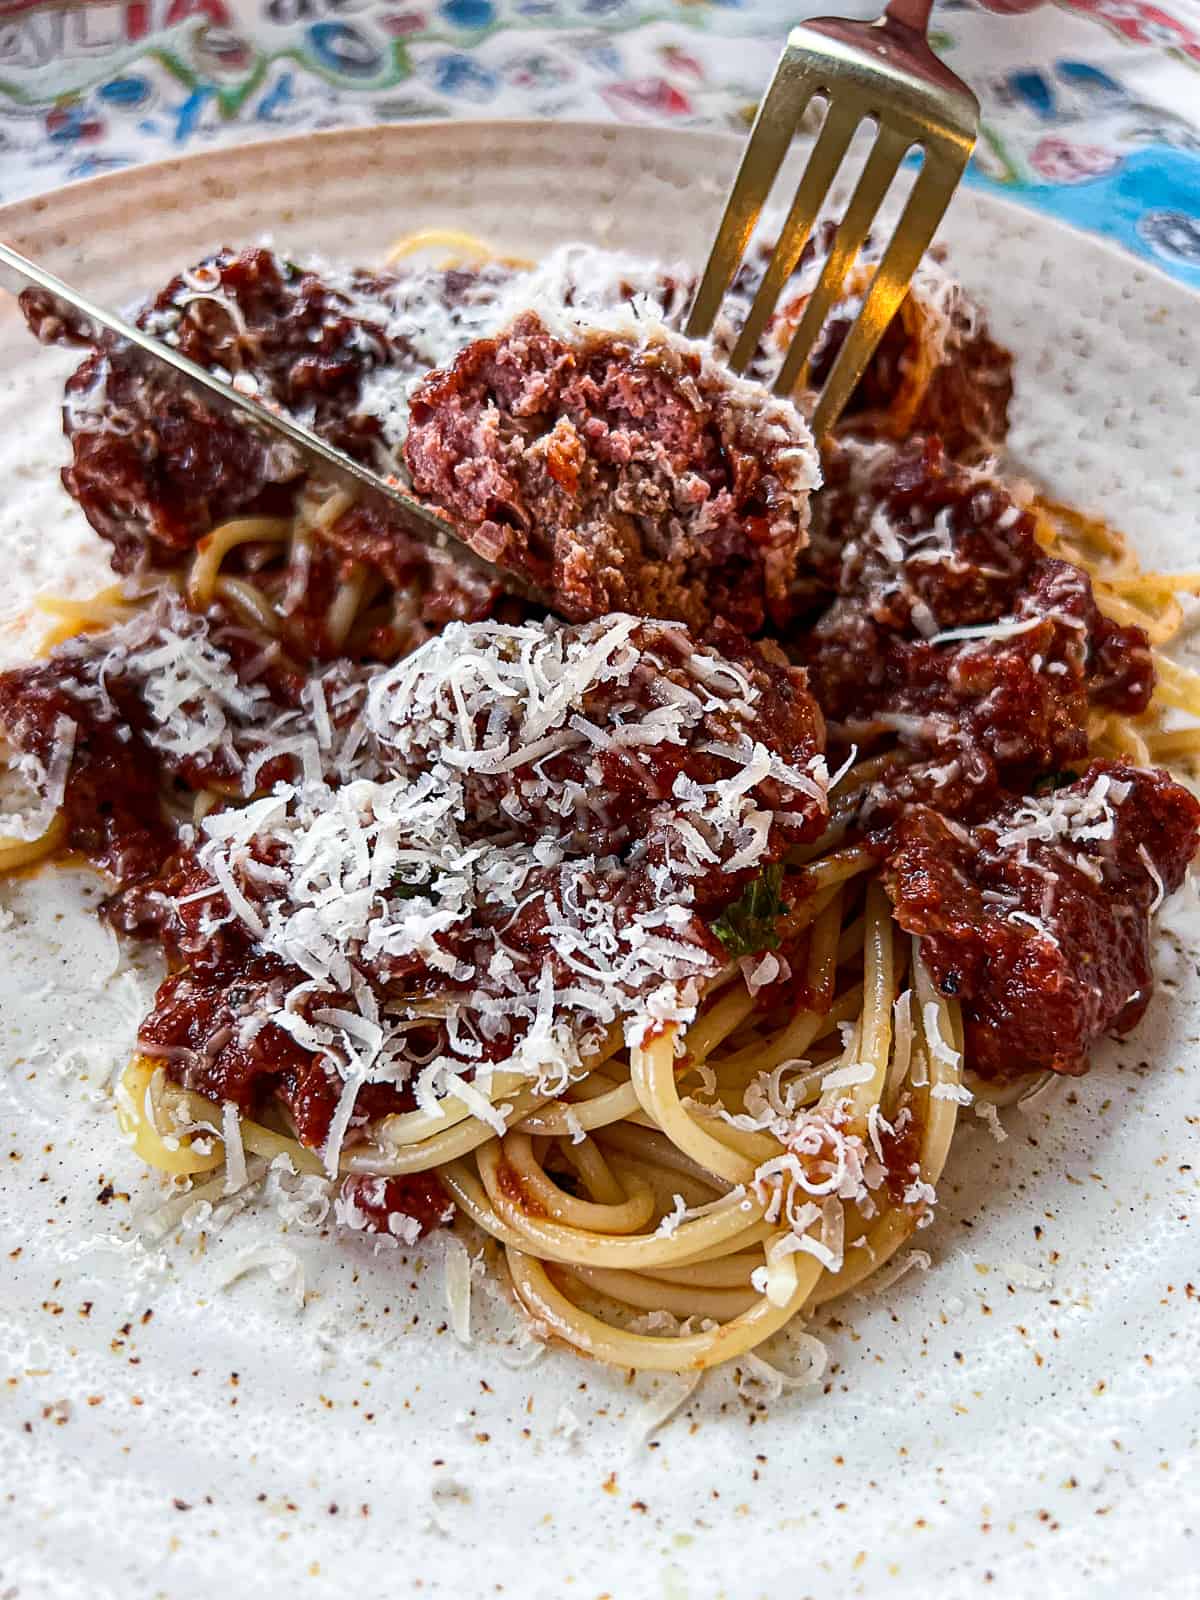 Italian Style Traeger Smoked Meatballs With Pasta And Spaghetti Sauce